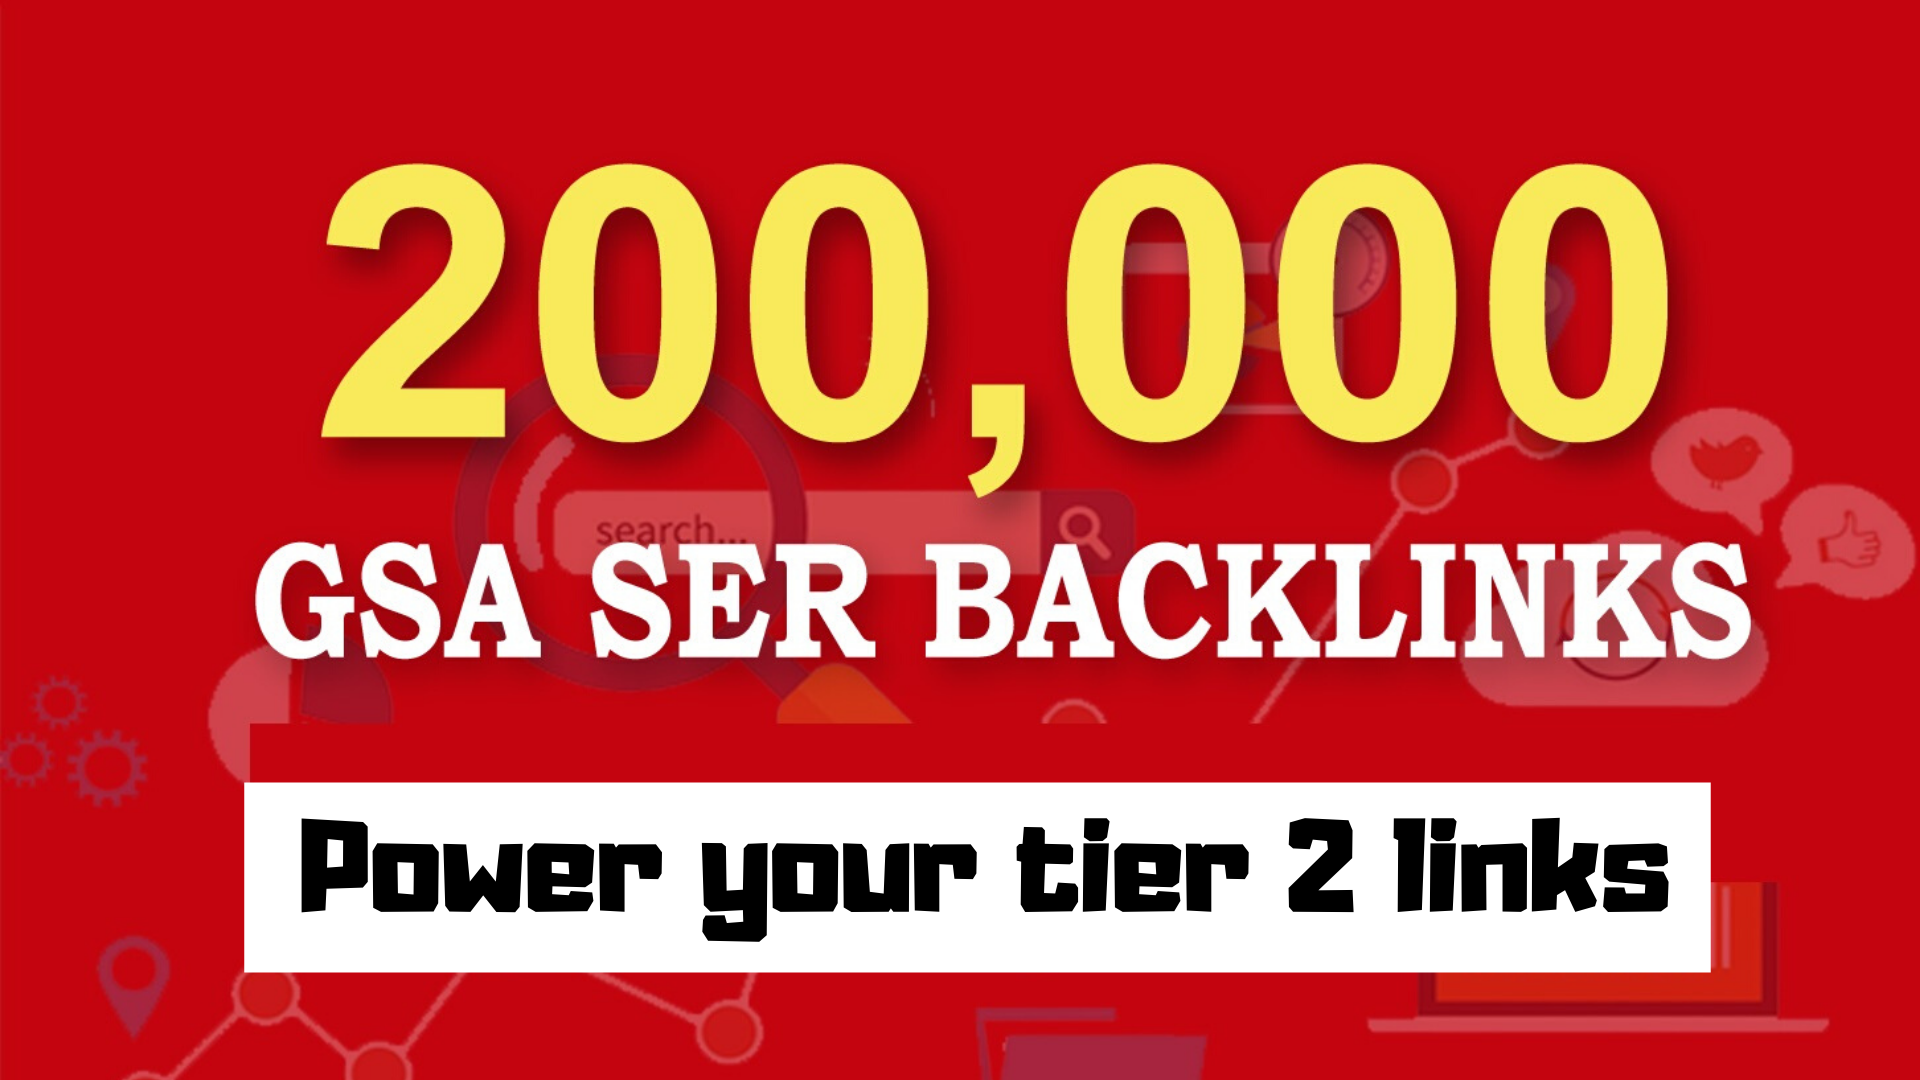 200,000 GSA Ser Authority Backlinks, Power Your Tier 2 Links